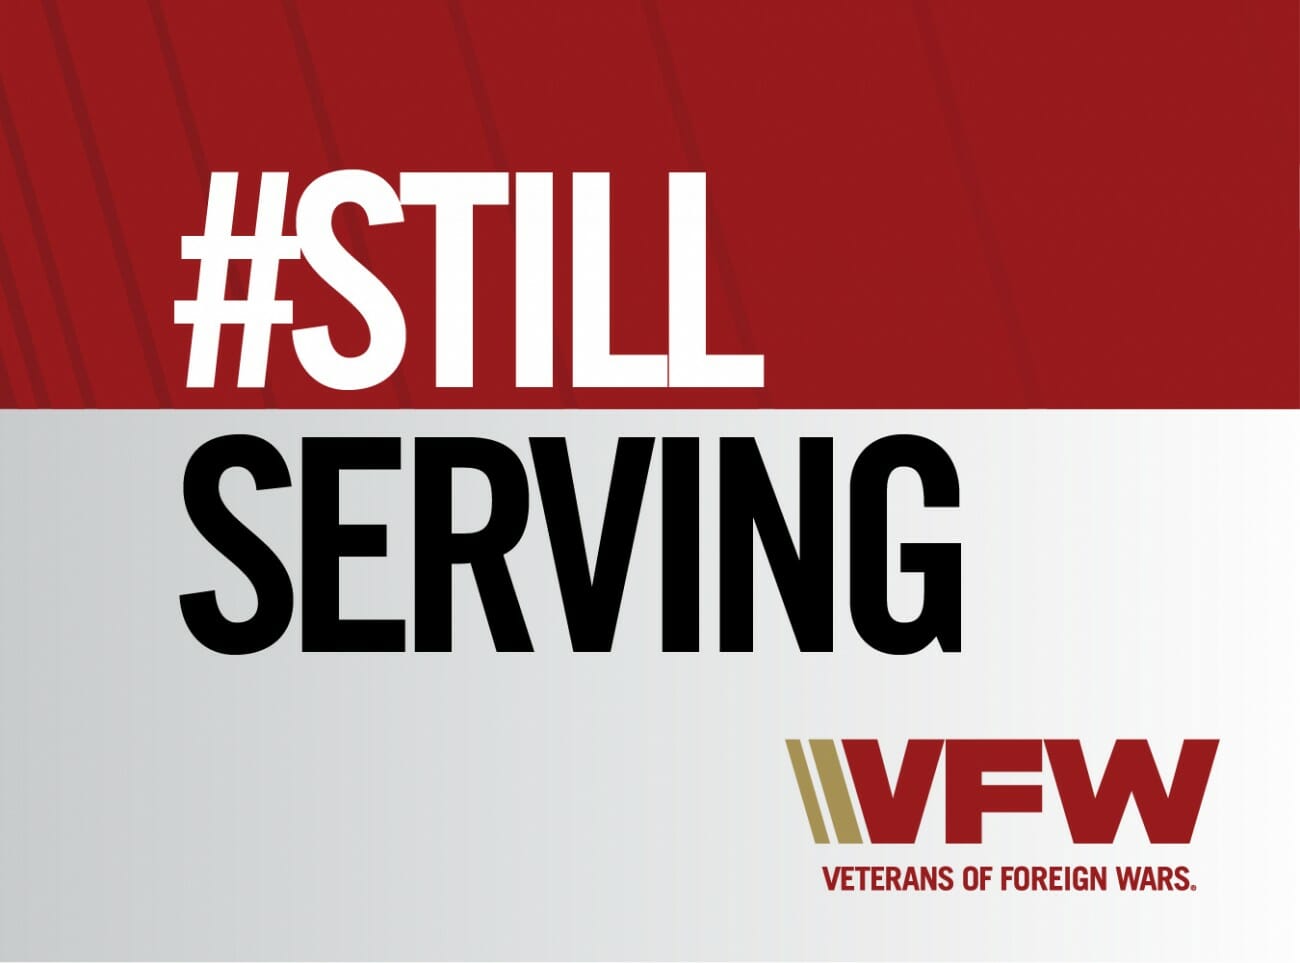 National VFW #StillServing campaign graphic